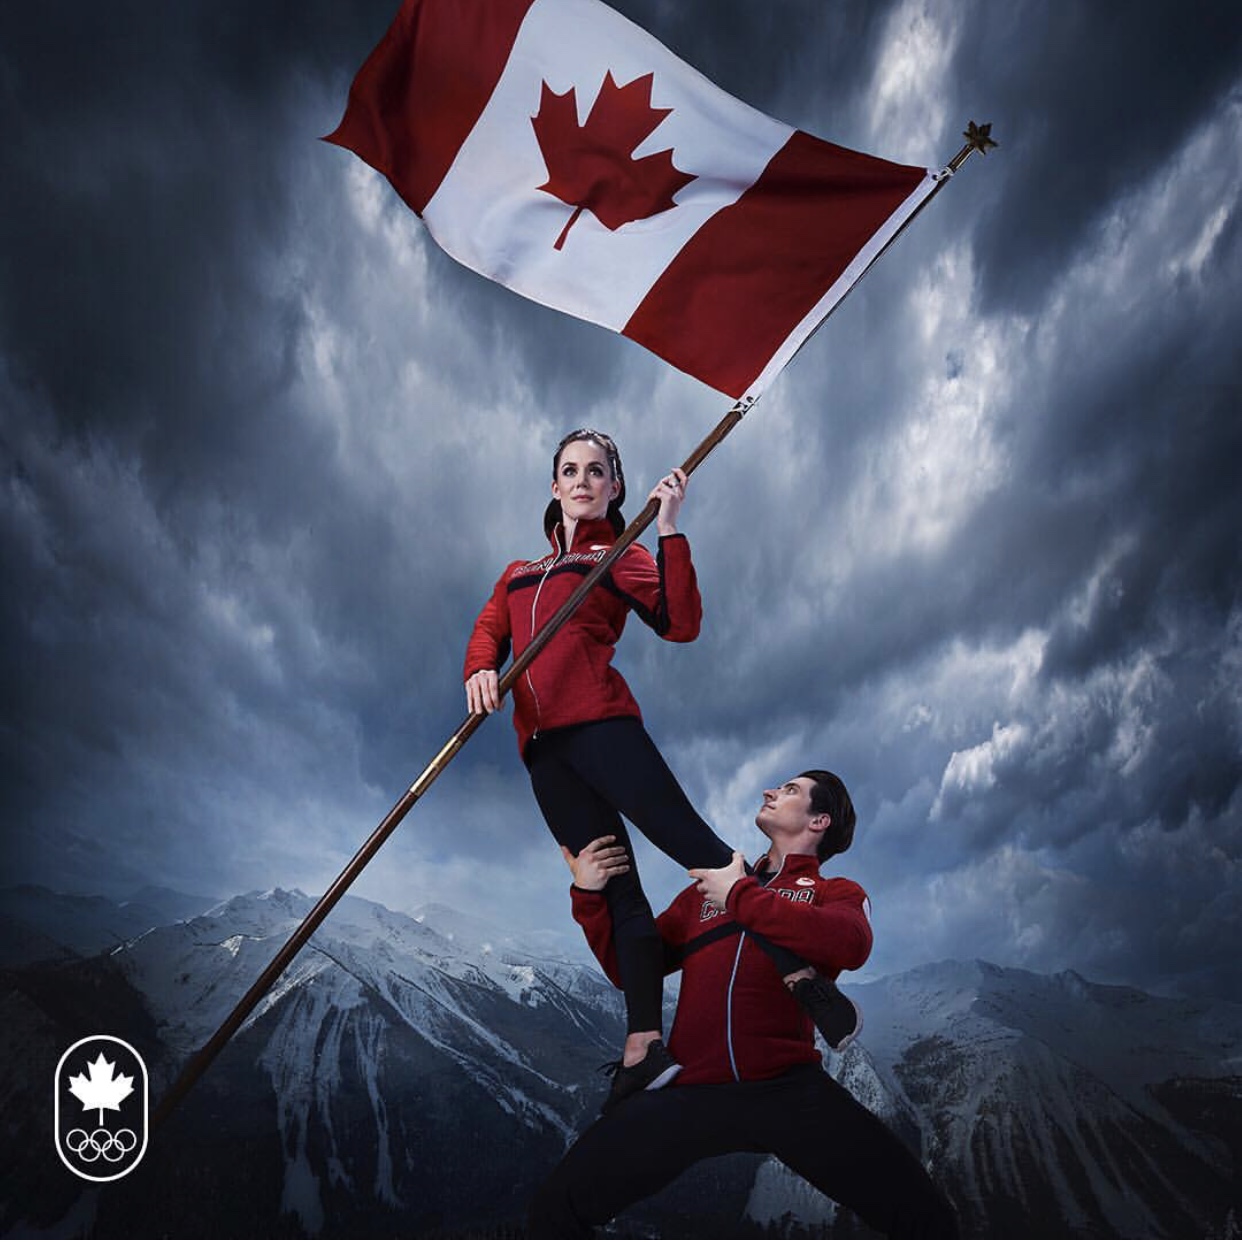 Англо канадцы. Эмеранс Машмейер Канада. Канада леваки. Канадец с флагом. Девушка с флагом Канады.